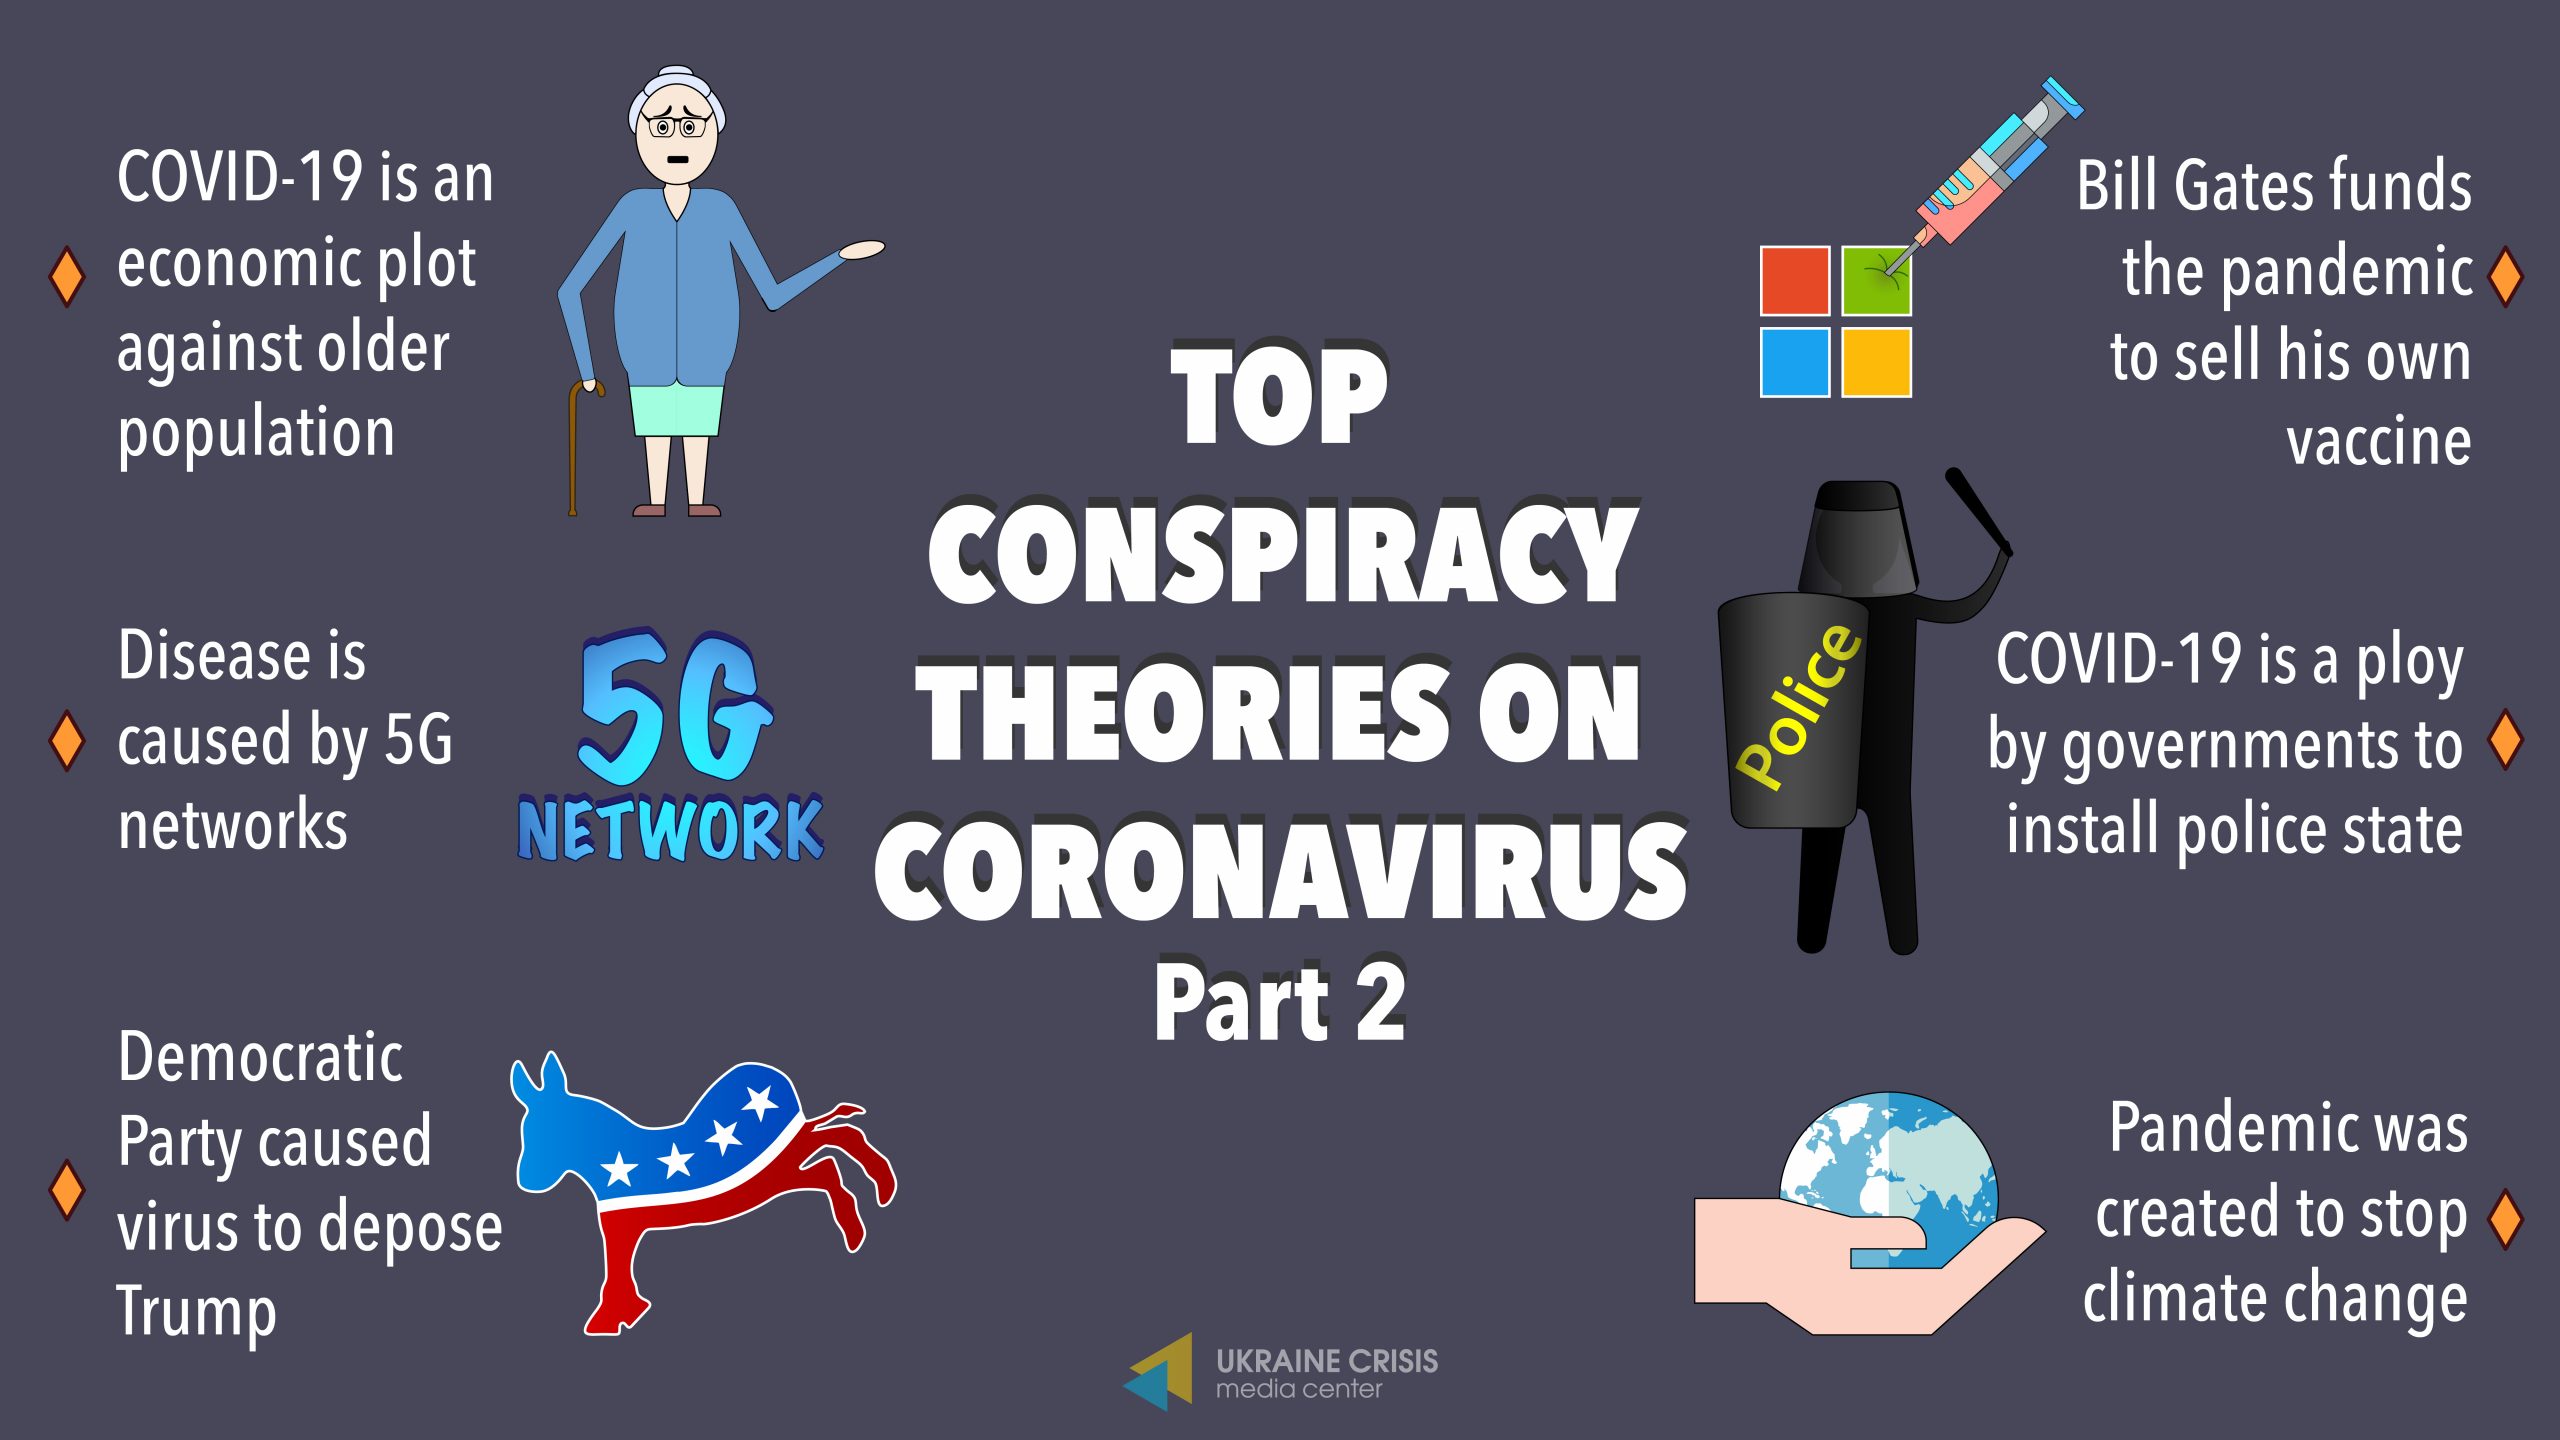 Top conspiracy theories on coronavirus | UACRISIS.ORG